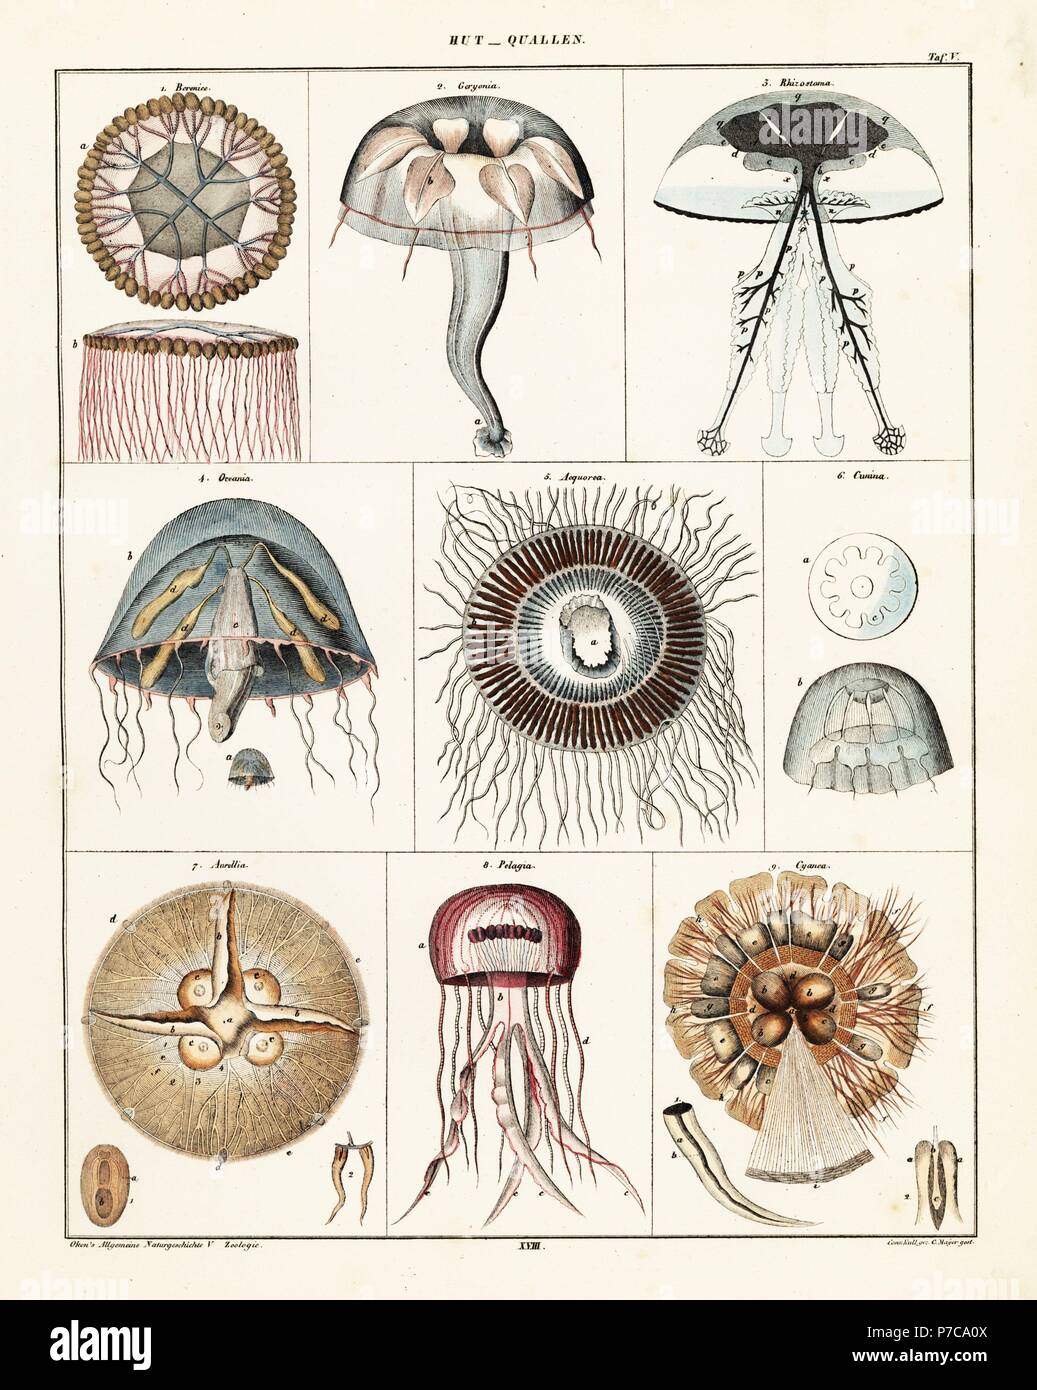 Varietà di meduse e medusae. Litografia da C. Mayer dopo Conrad Kull da Lorenz Oken universale della storia naturale, Allgemeine Naturgeschichte fur alle Stande, Stuttgart, 1841. Foto Stock